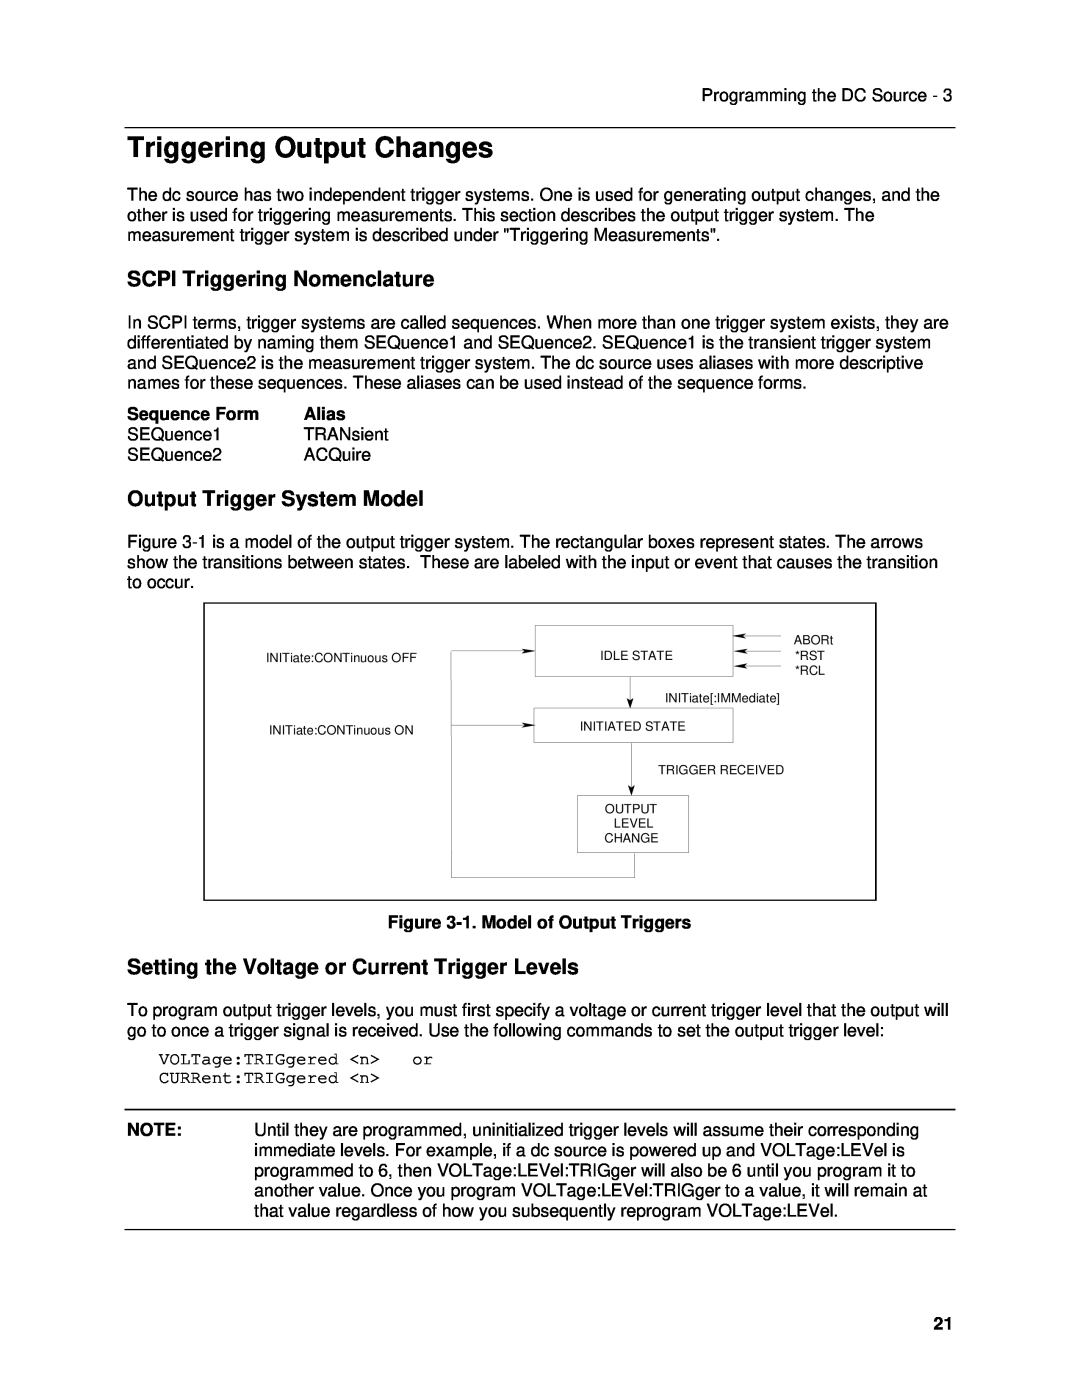 Agilent Technologies 66332A, 6634B Triggering Output Changes, SCPI Triggering Nomenclature, Output Trigger System Model 